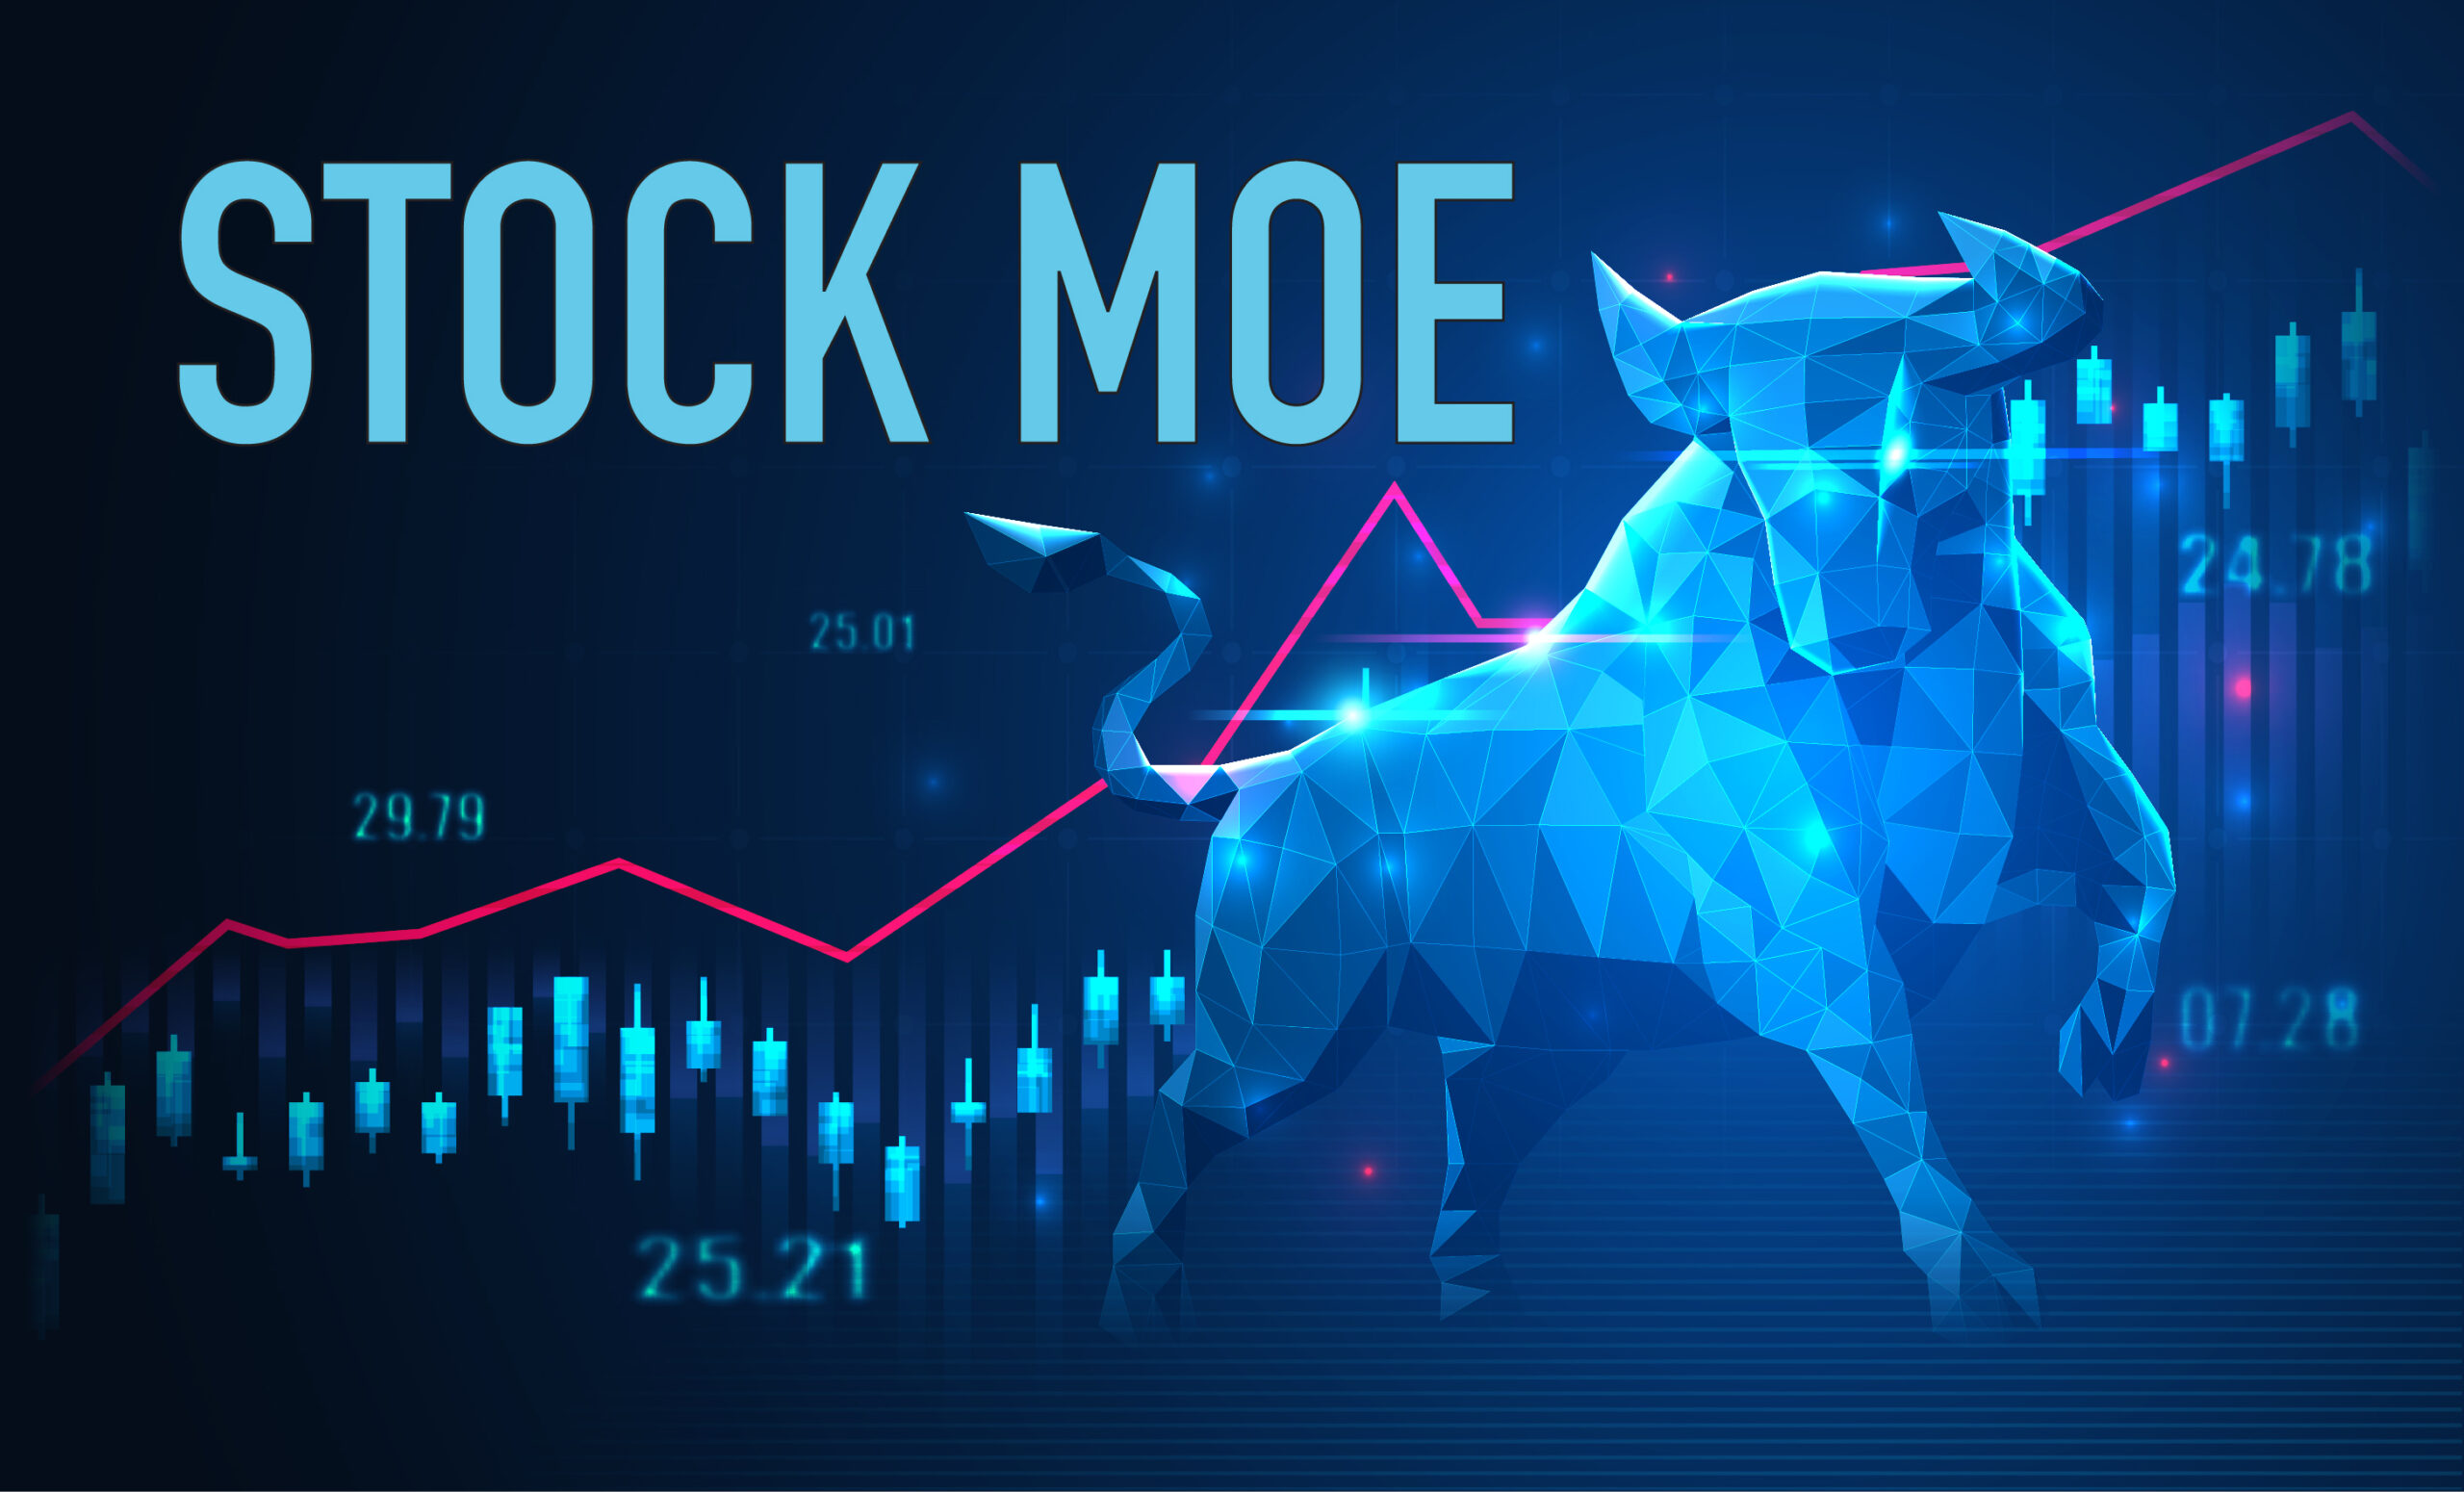 Stock Moe Sign